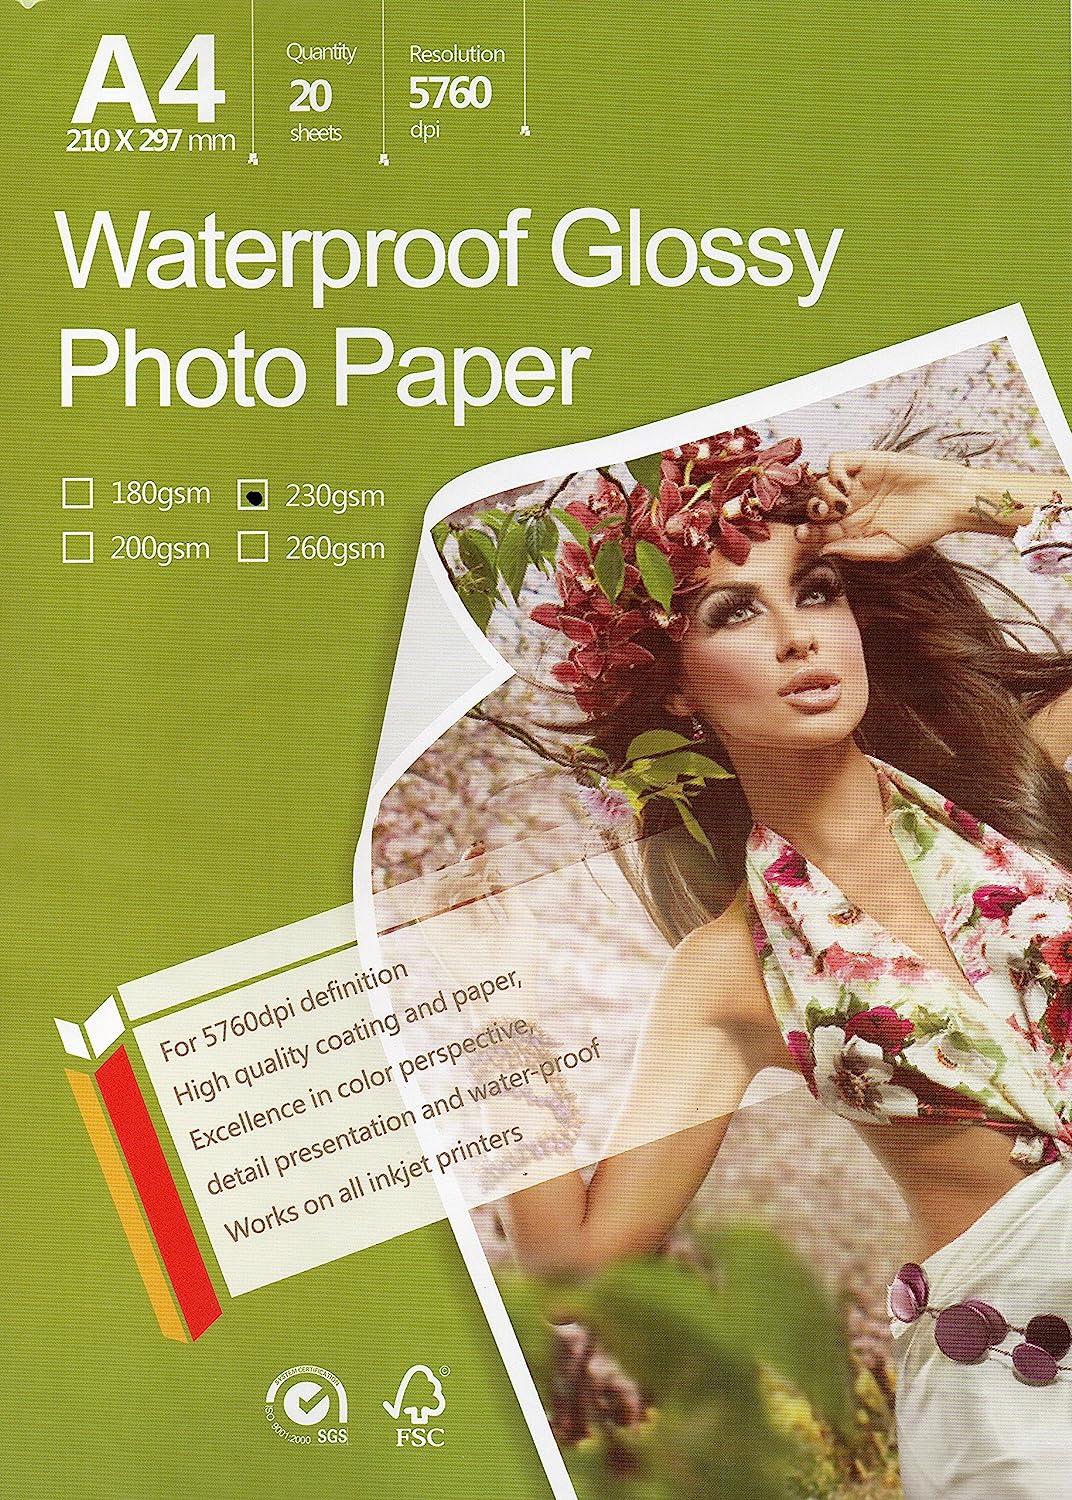 Great Premium Quality Photo Glossy White Paper [...]